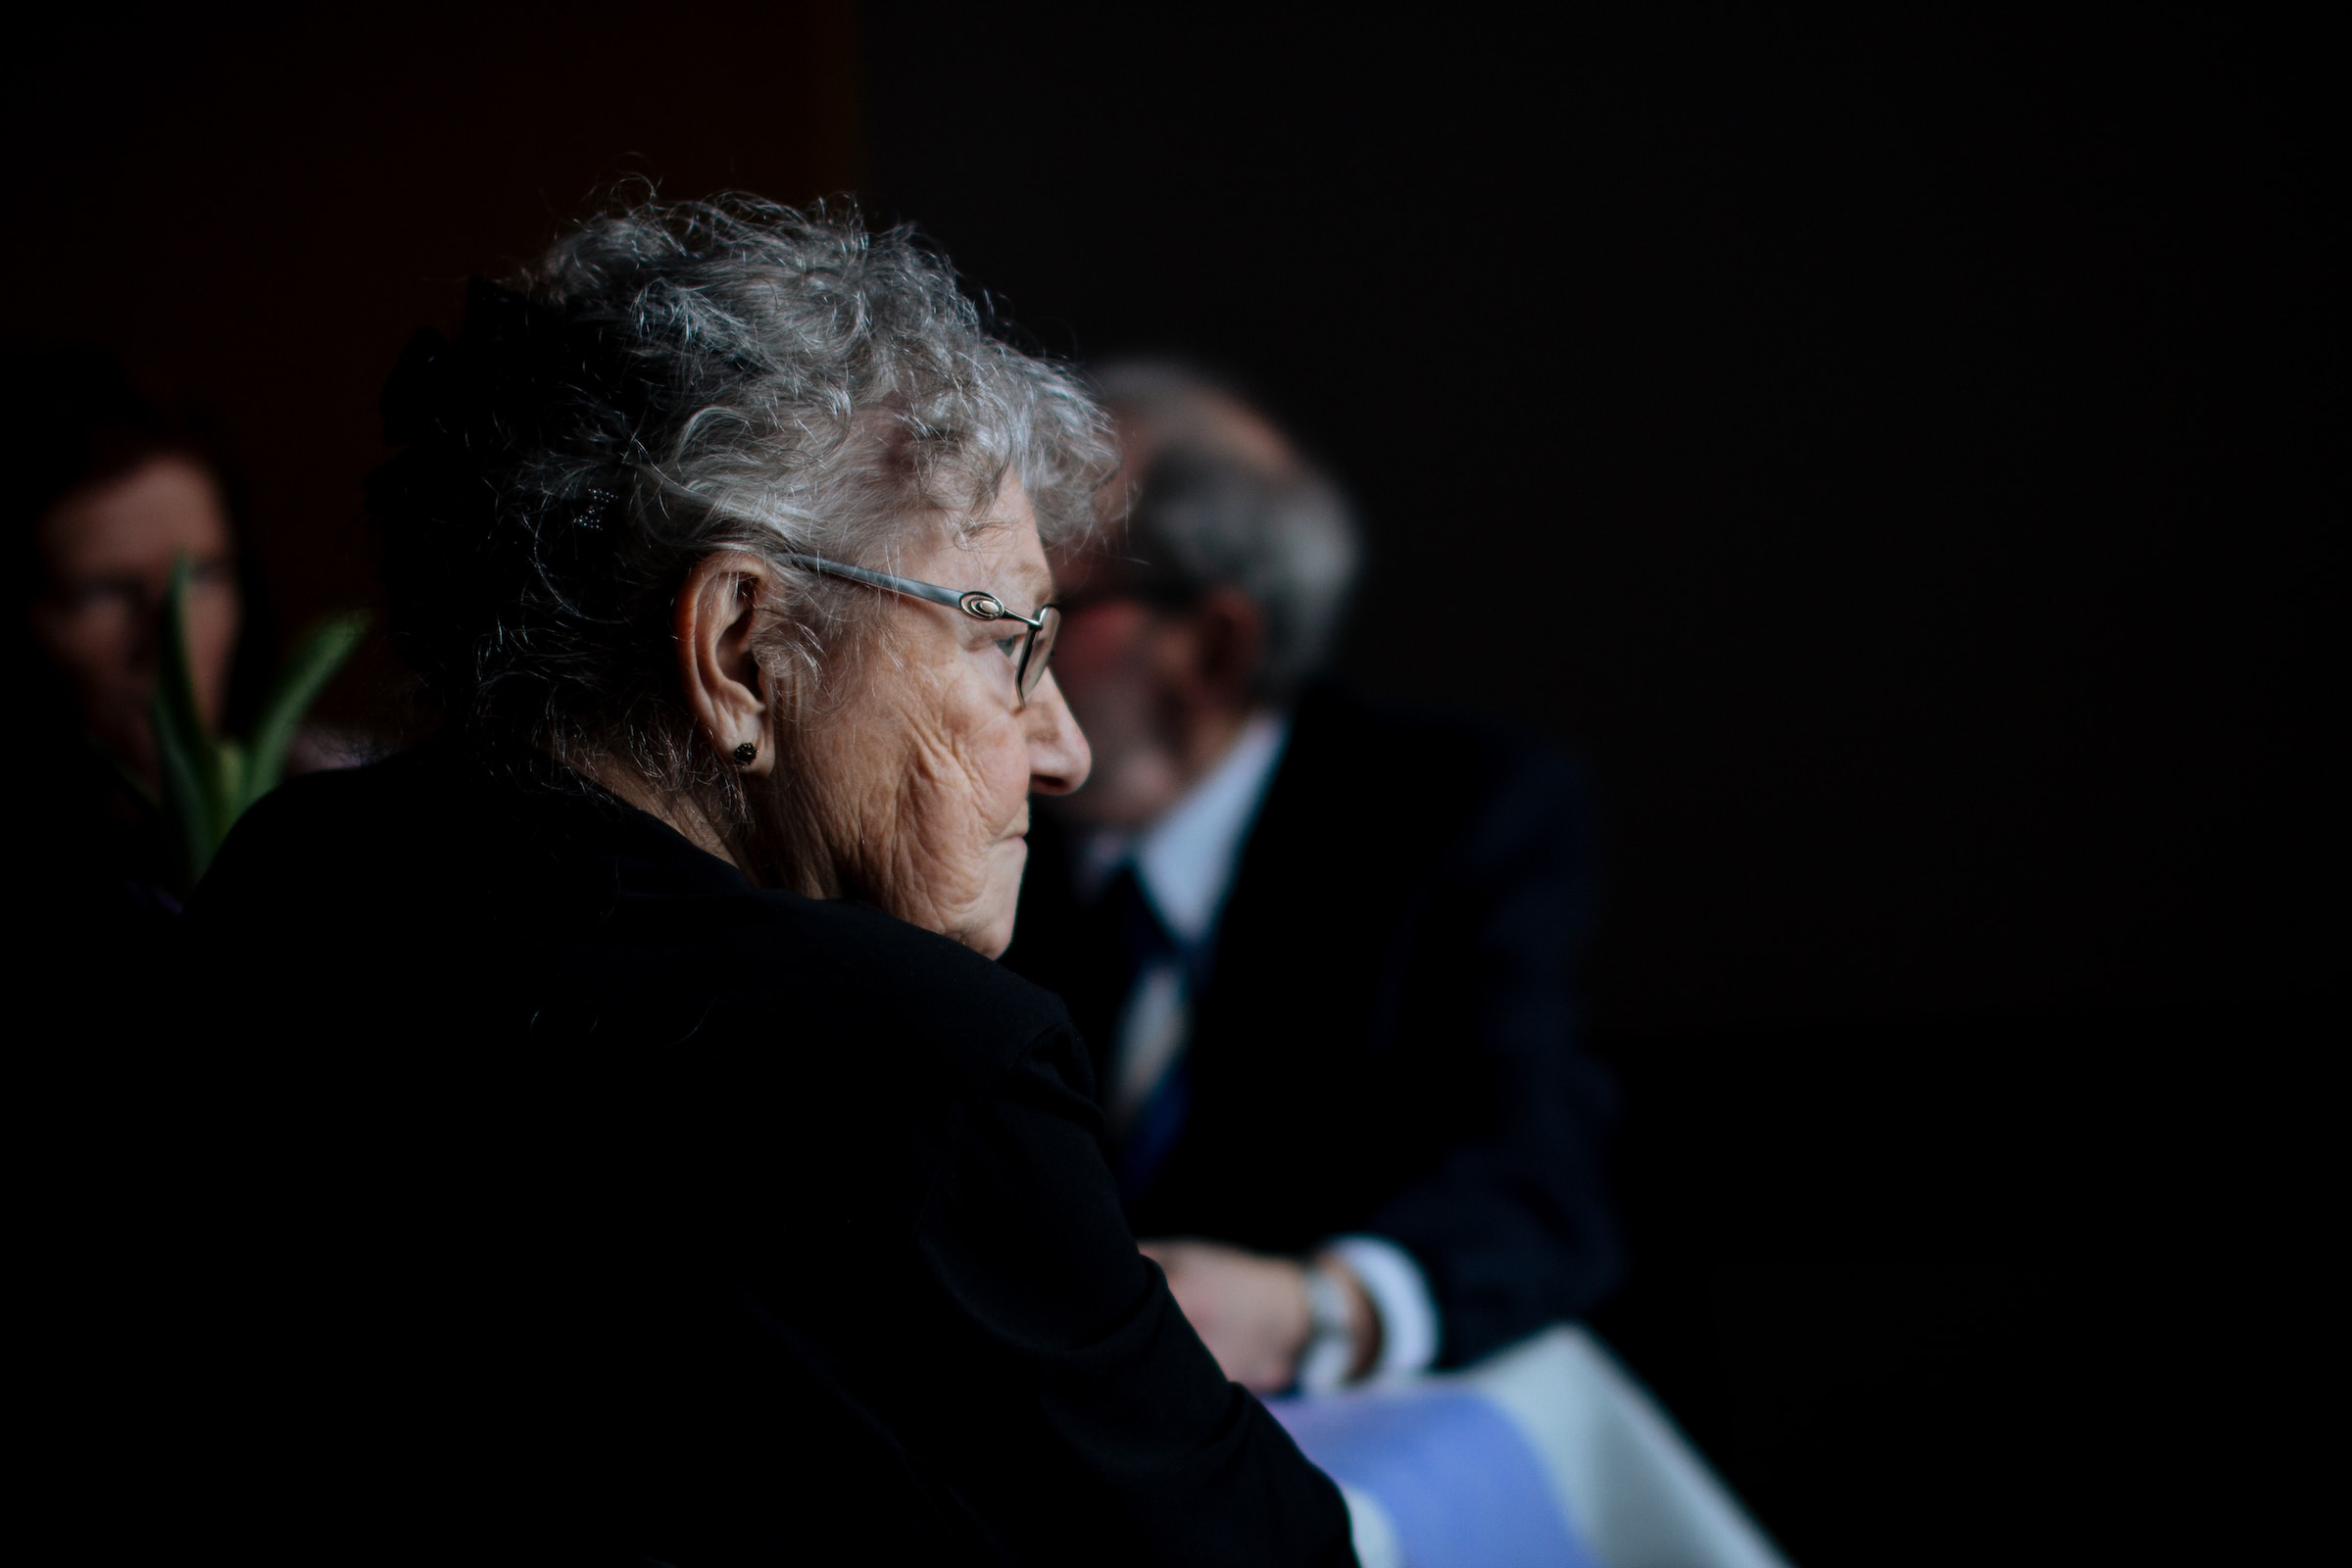 About 1 in 6 Australians Experiences Elder Abuse, Study Reveals